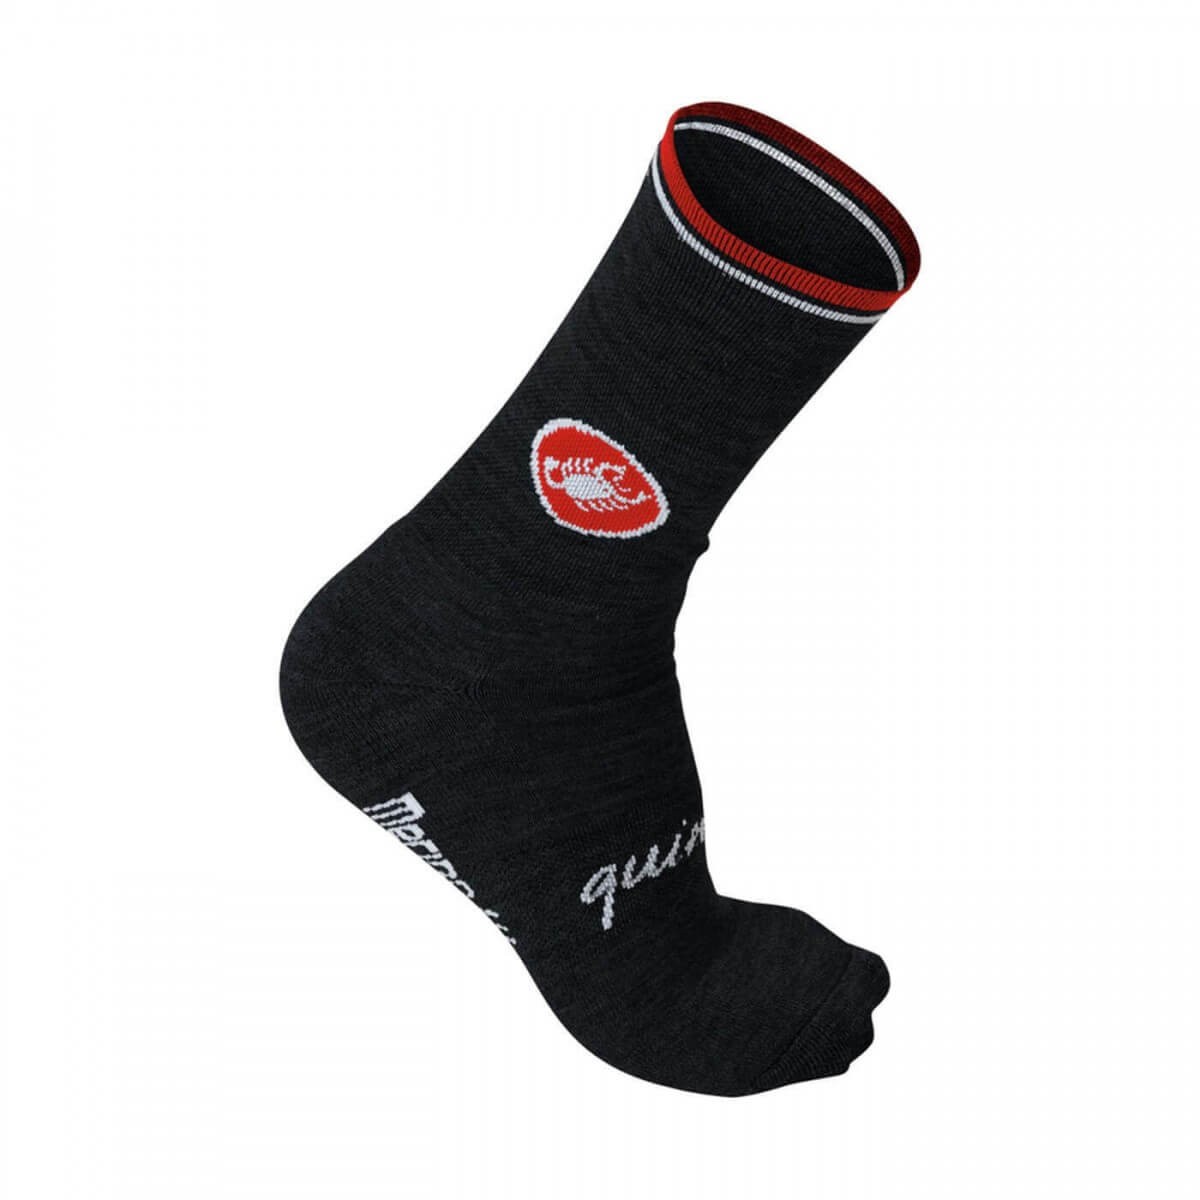 Castelli Quindici Soft Sock 15cm Black, Size S/M